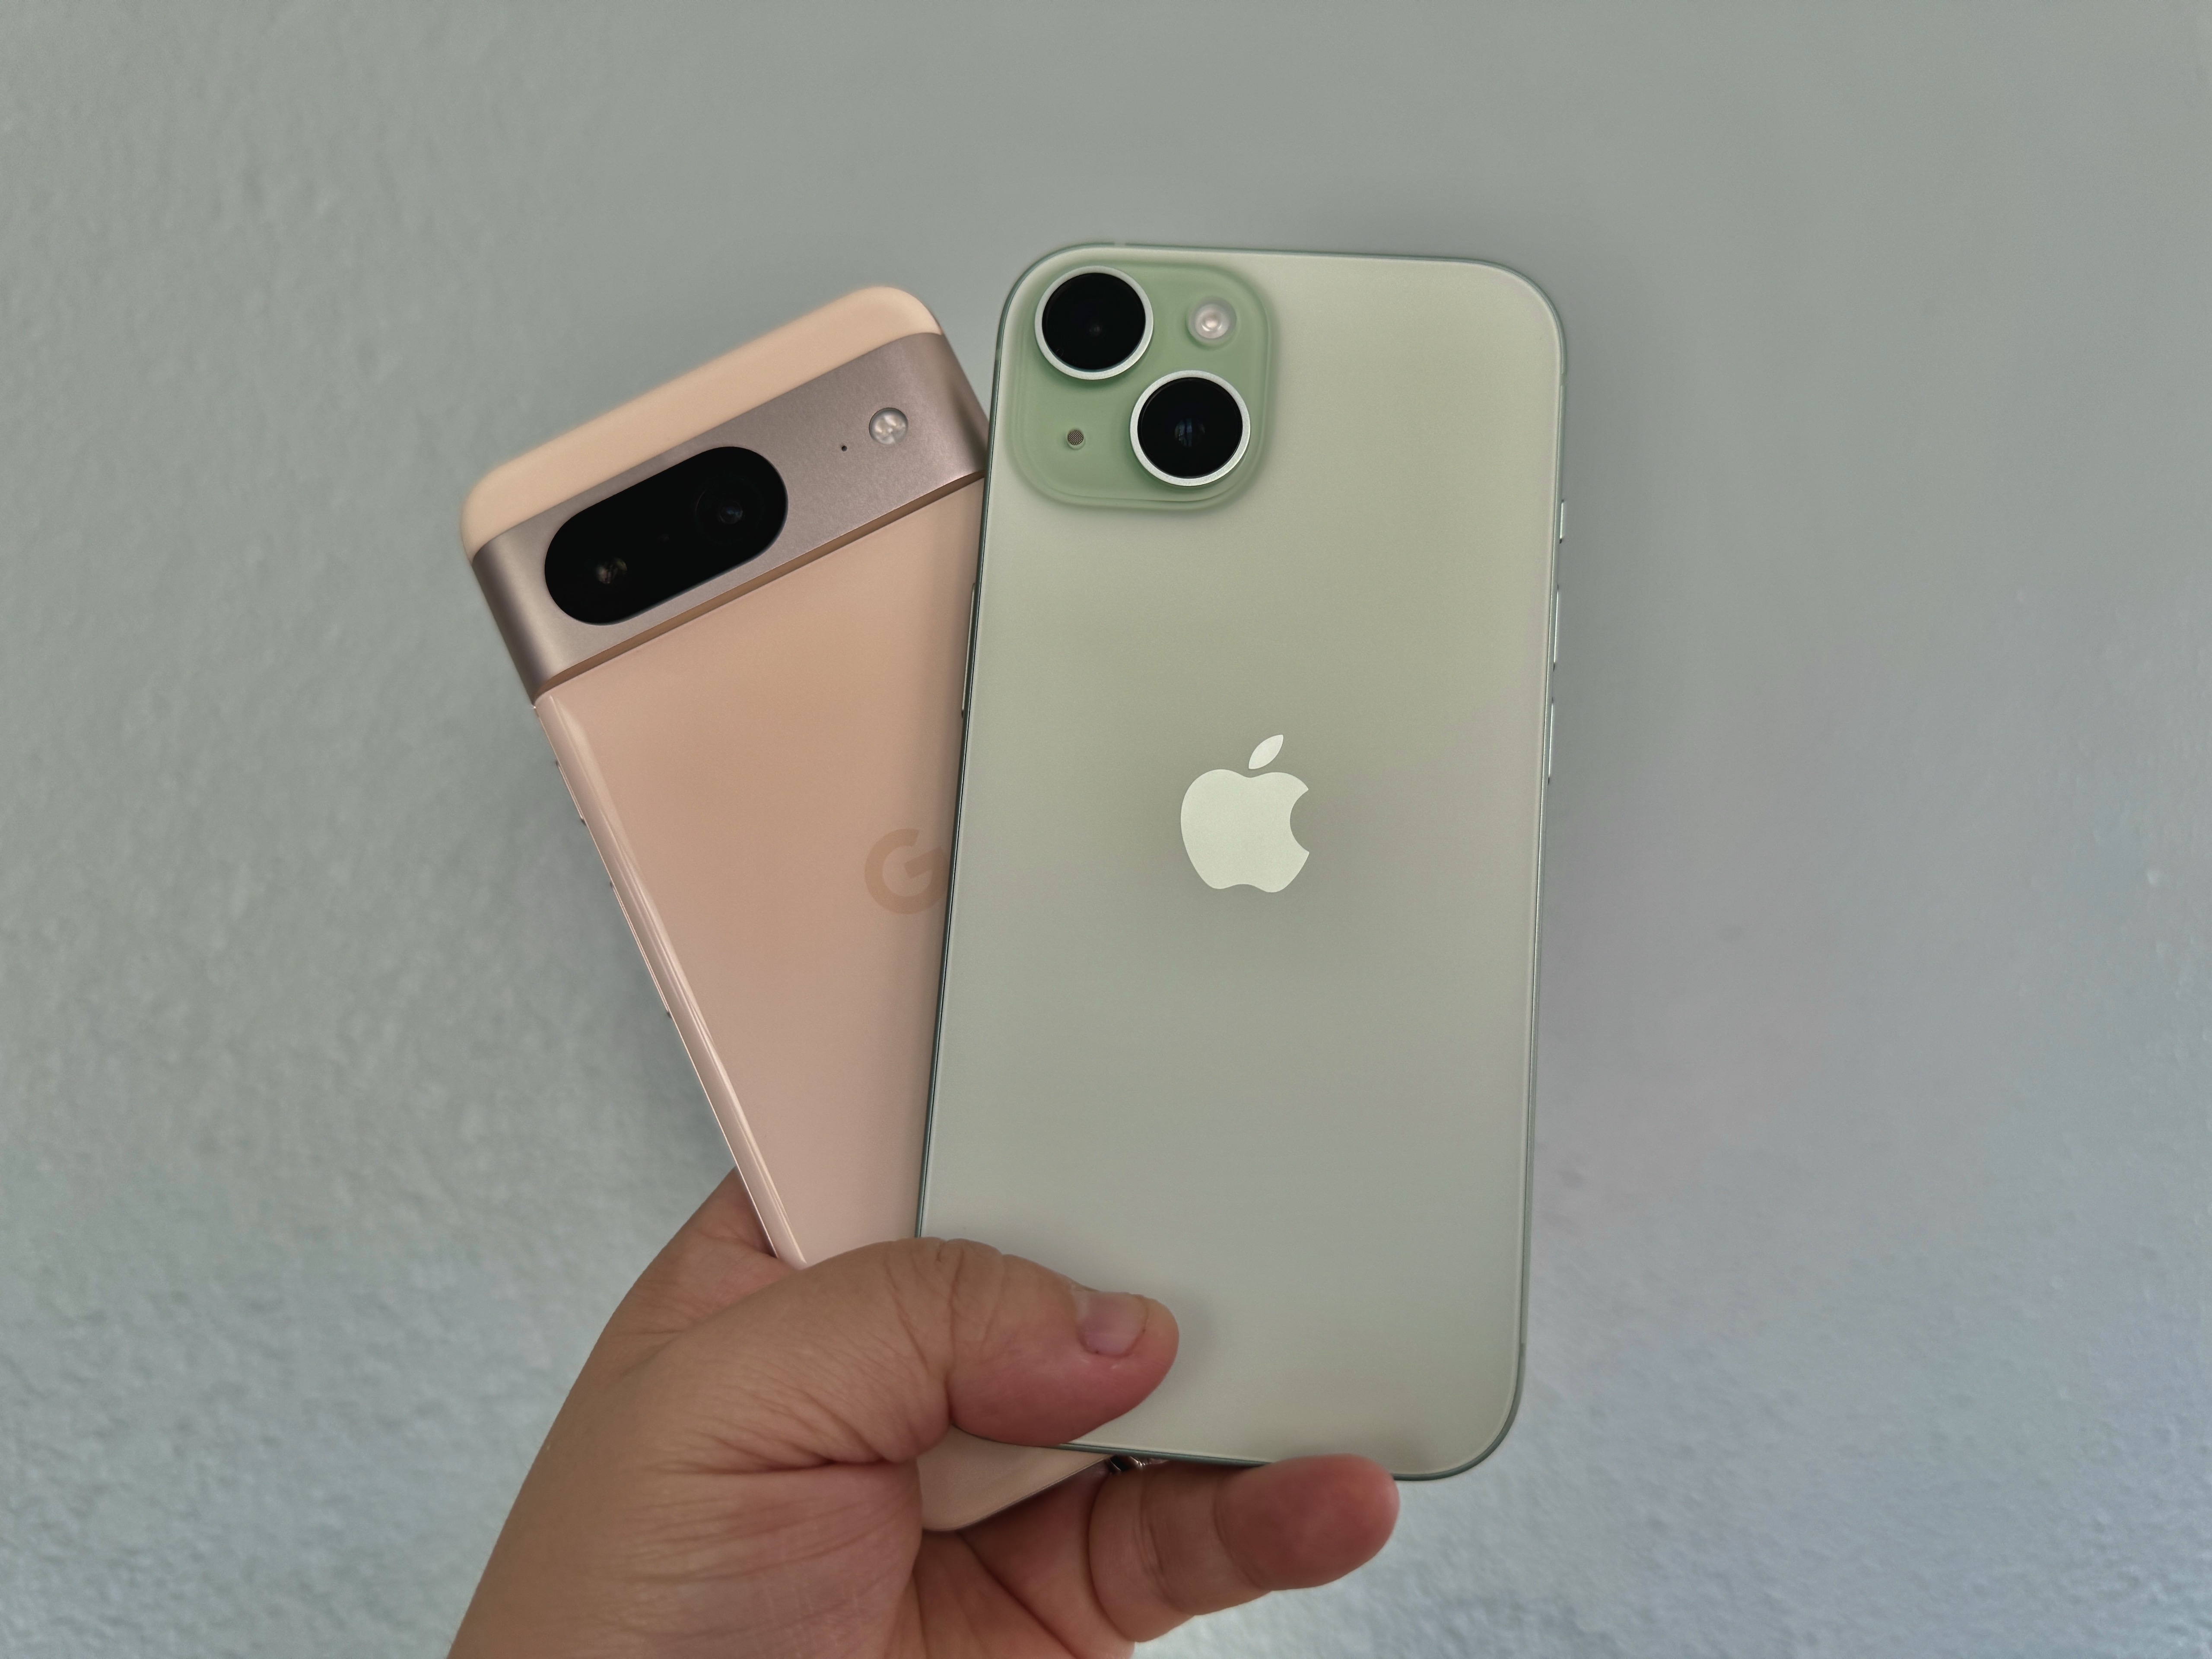 iPhone 15 Pro vs. Google Pixel 8 Pro: Which smartphone is best?